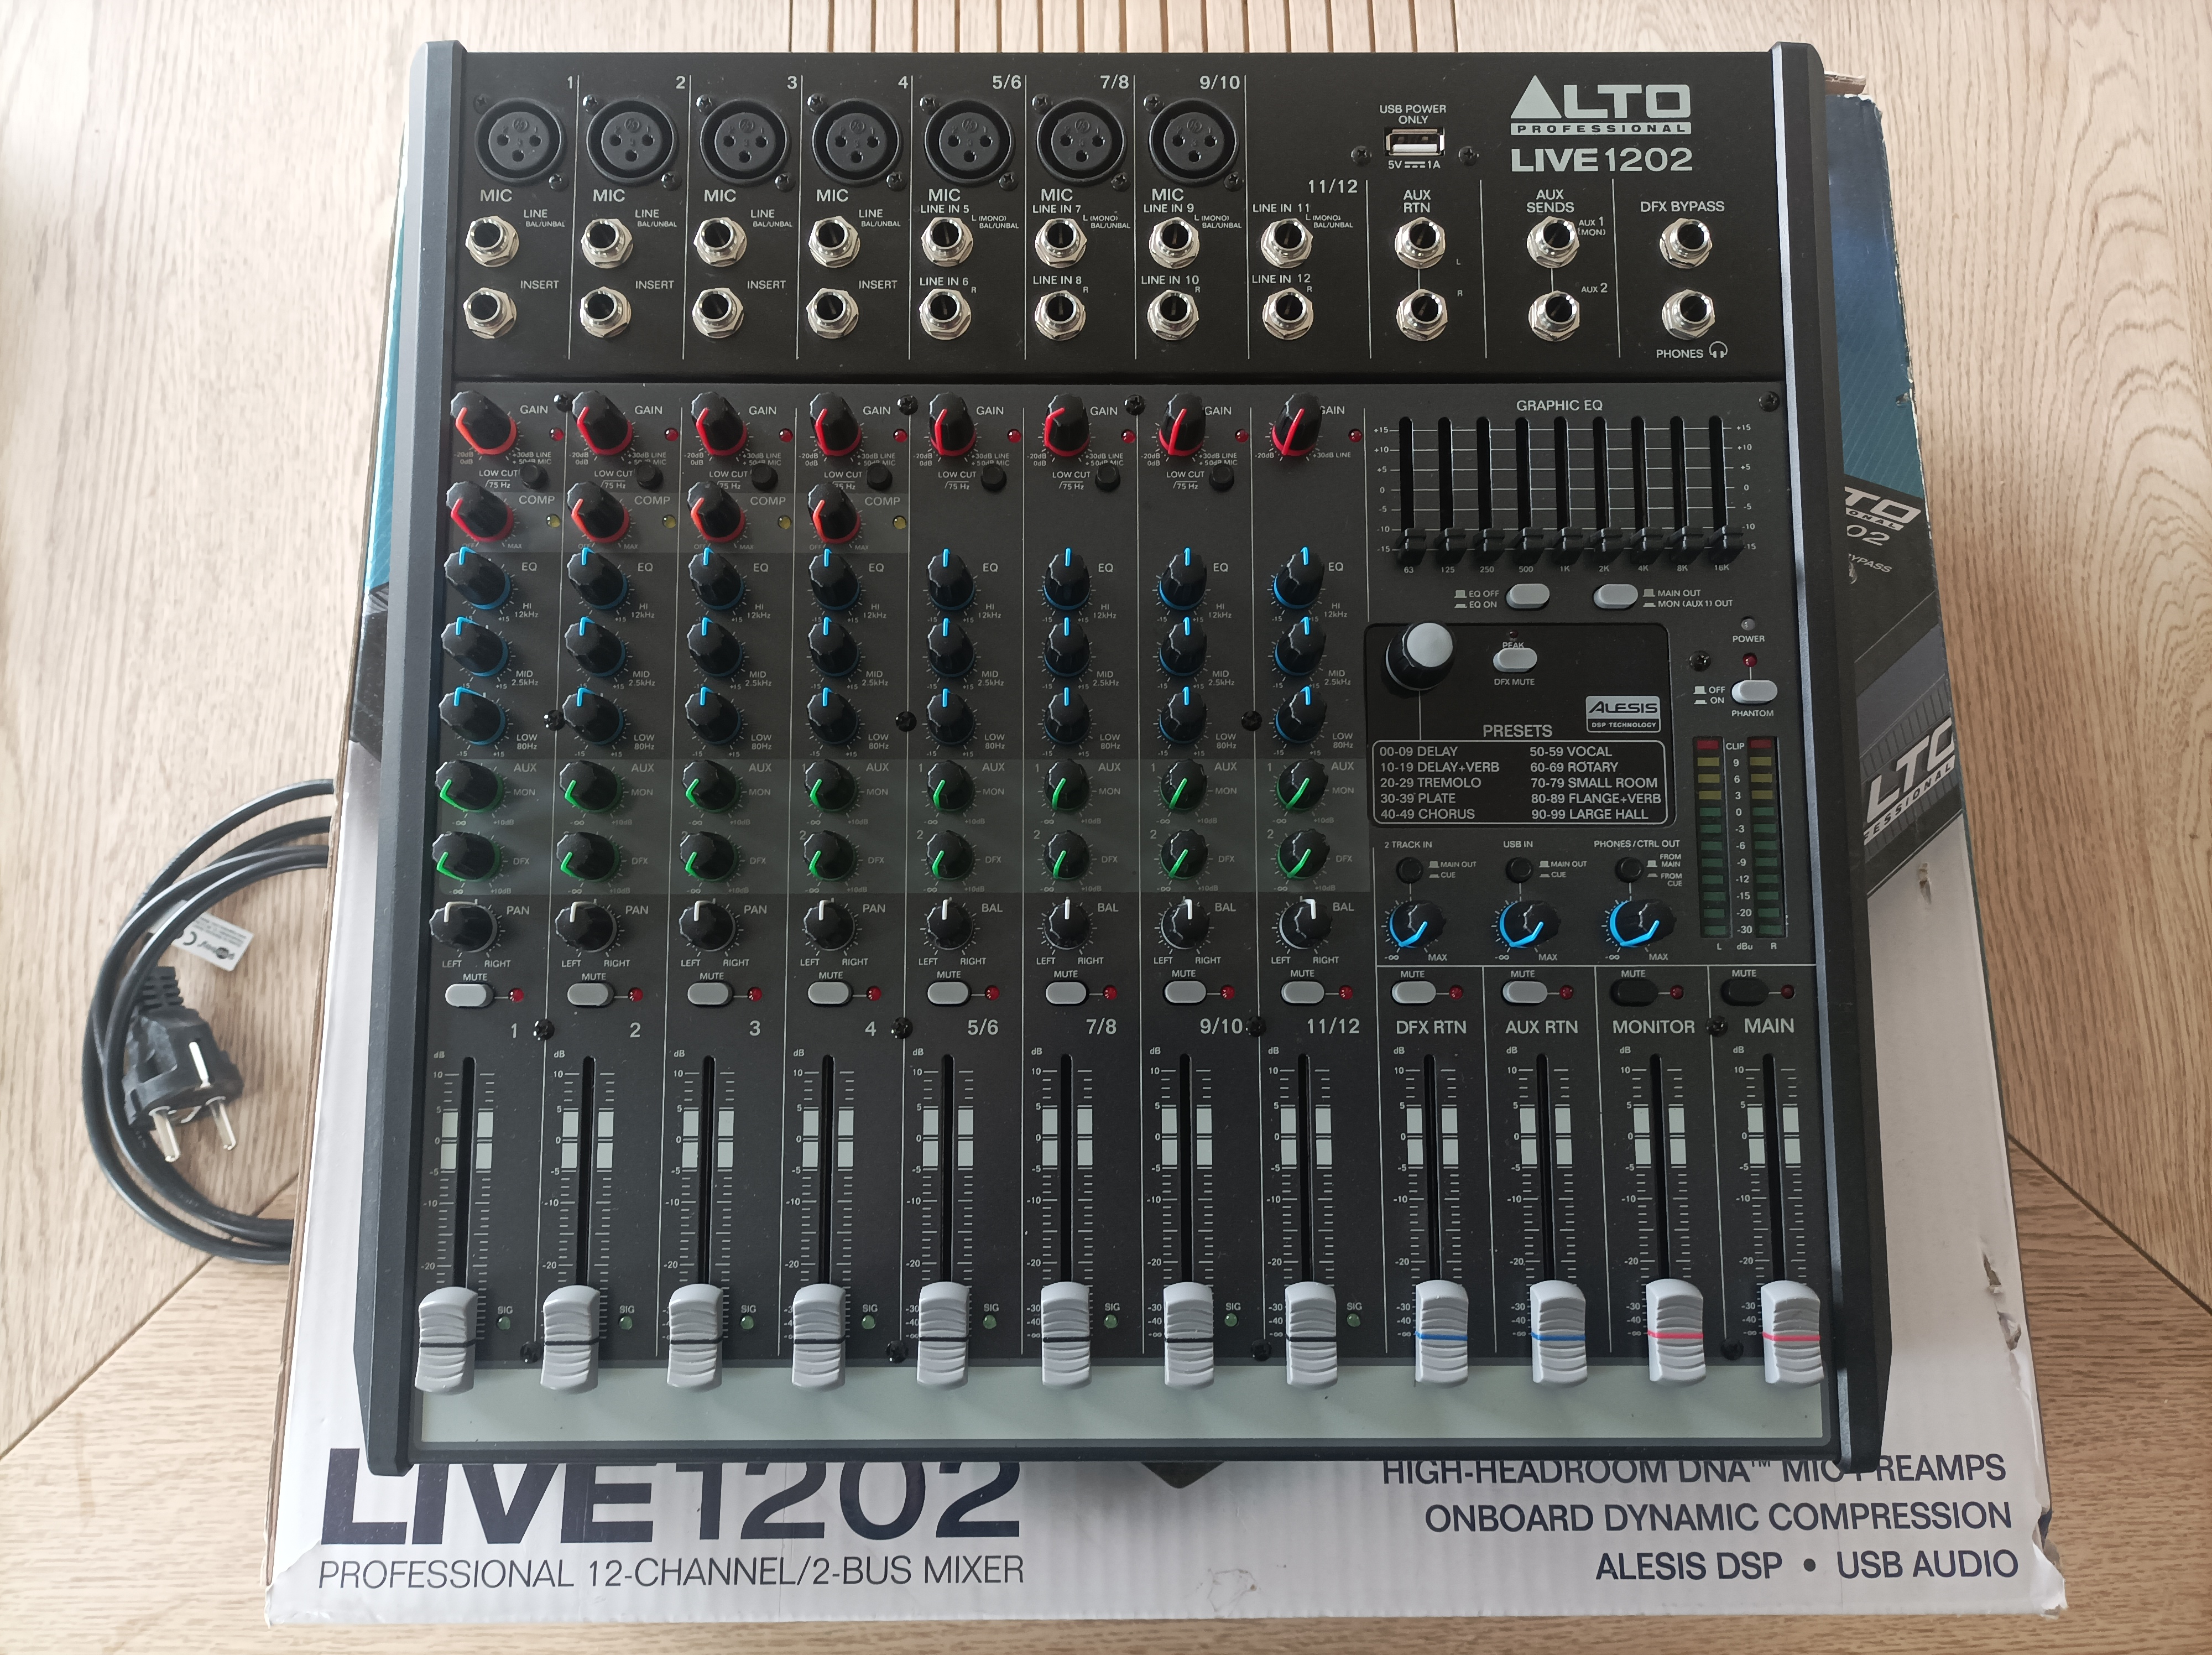 Table de Mixage LIVE 1202 - Alto Professional